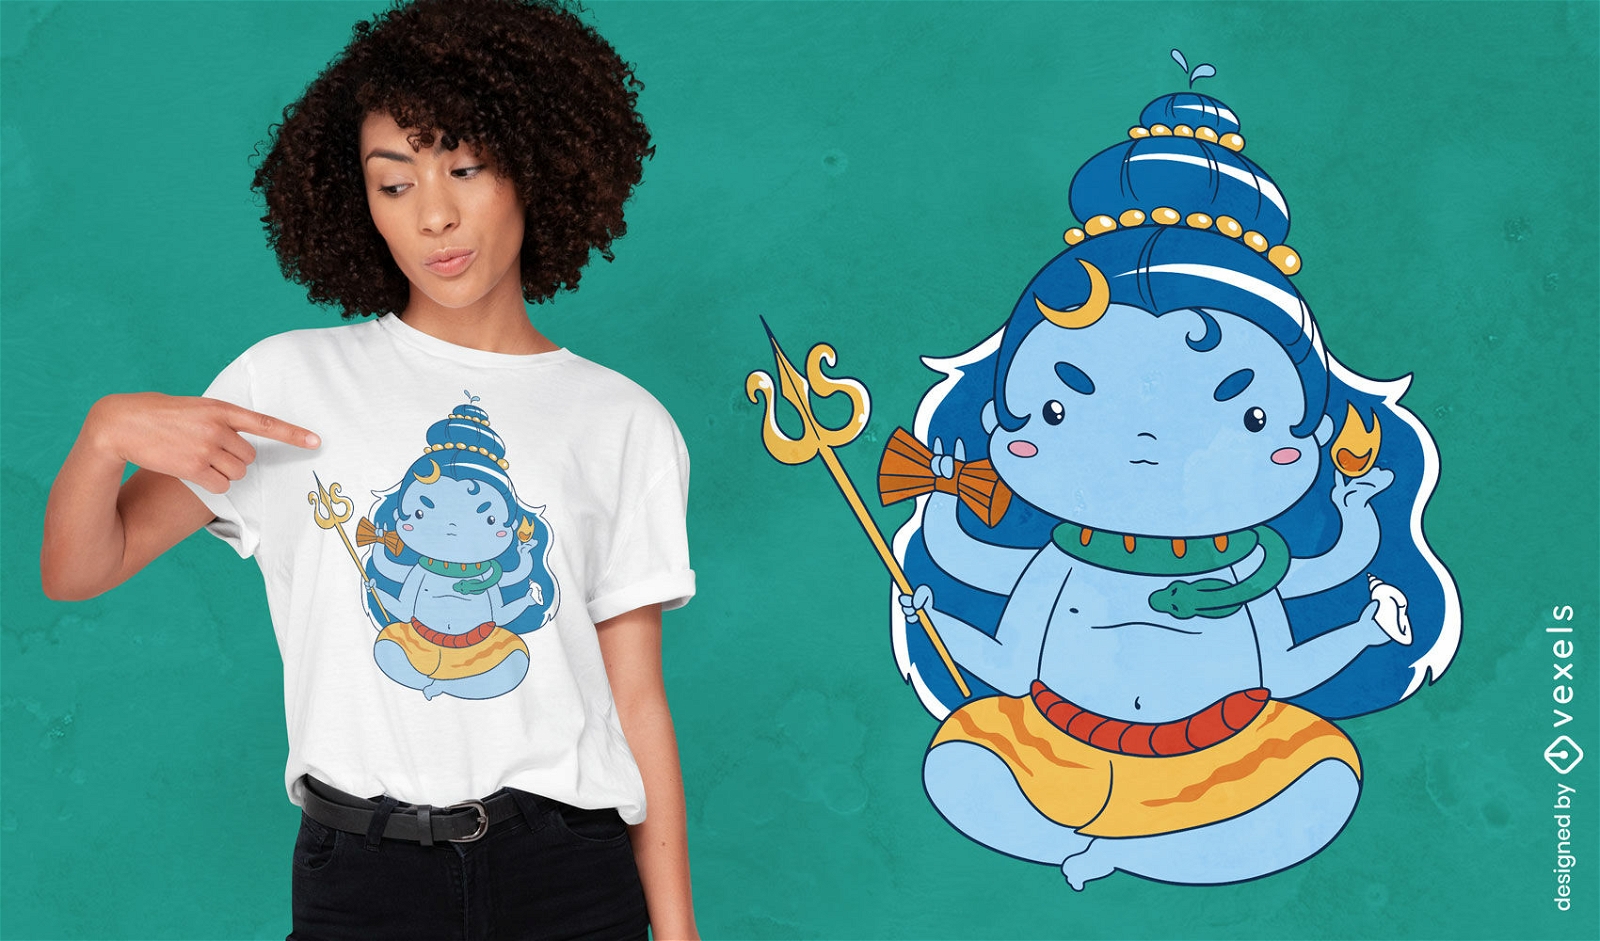 Shiva hindu deity cartoon t-shirt design